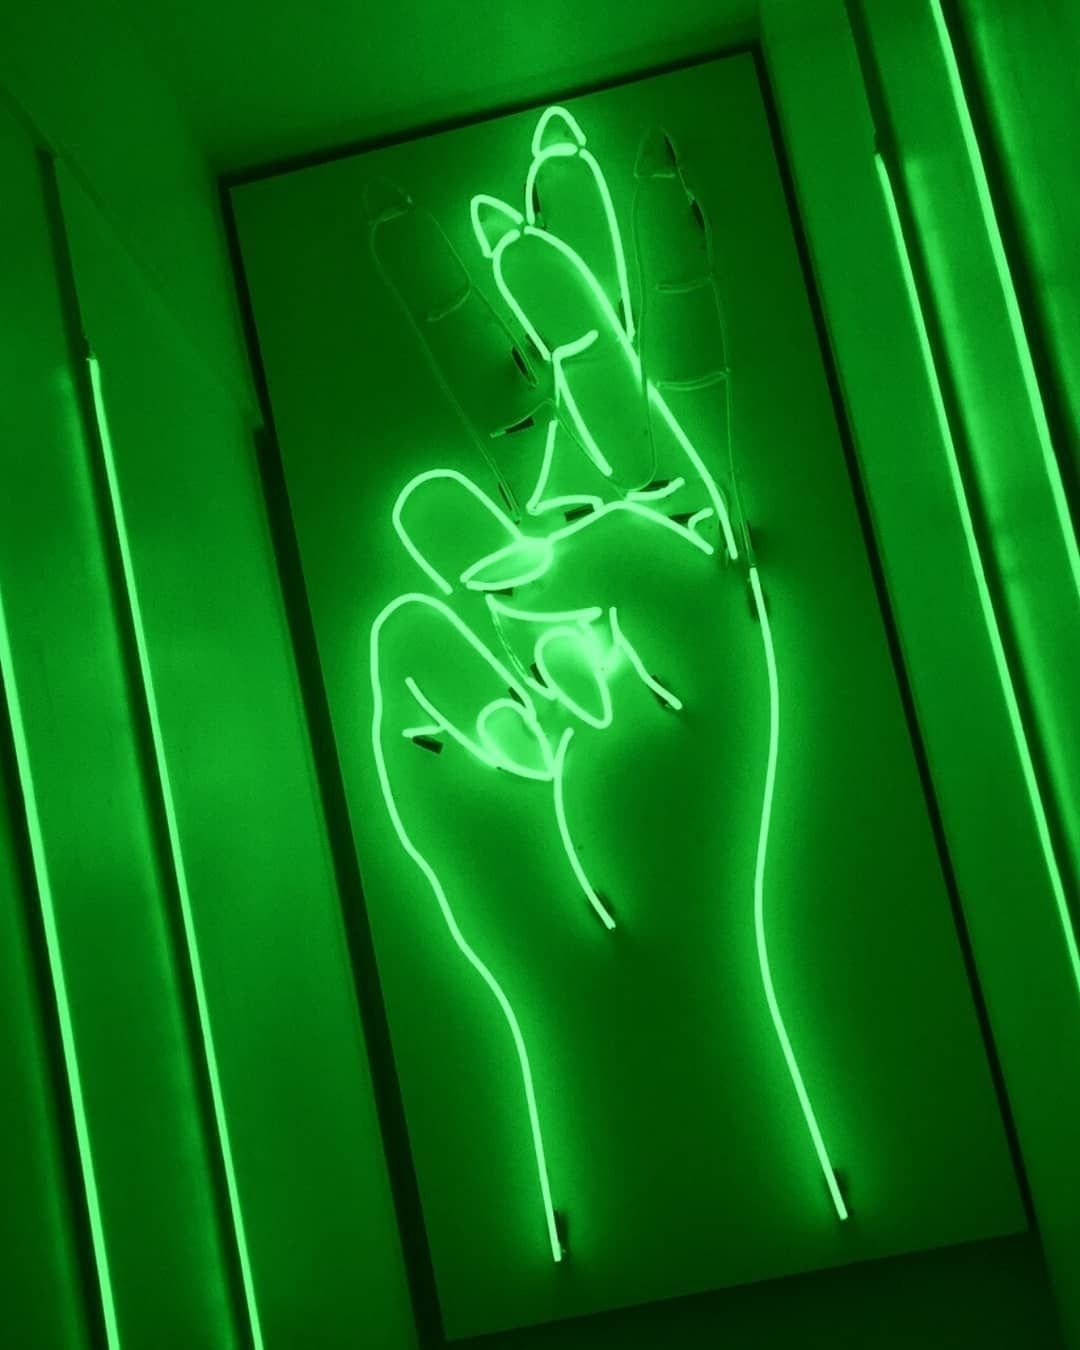 Green Aesthetic, Neon Aesthetic, Neon Green Aesthetic, Neon Green, Neon Lighting, Lighting, Neon Sign, Neon Wallpaper, Party House Wallpaper - Lime green, neon green